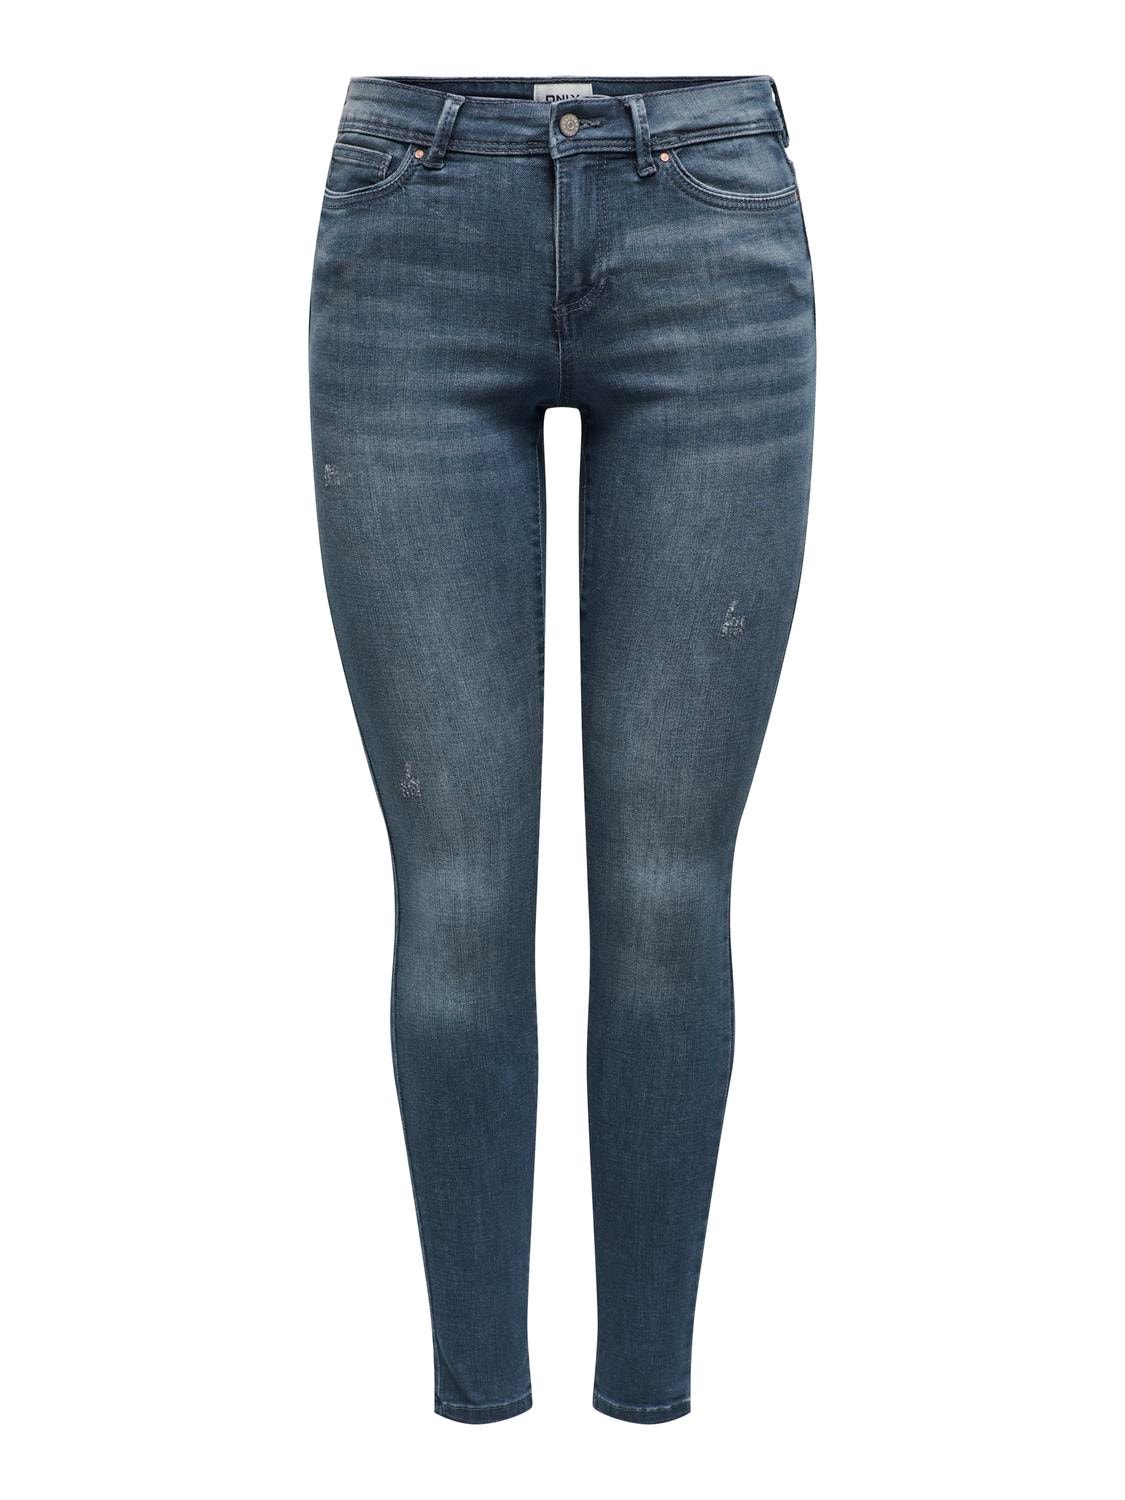 ONLY Skinny Fit Mid waist Jeans -Blue Black Denim - 15233288